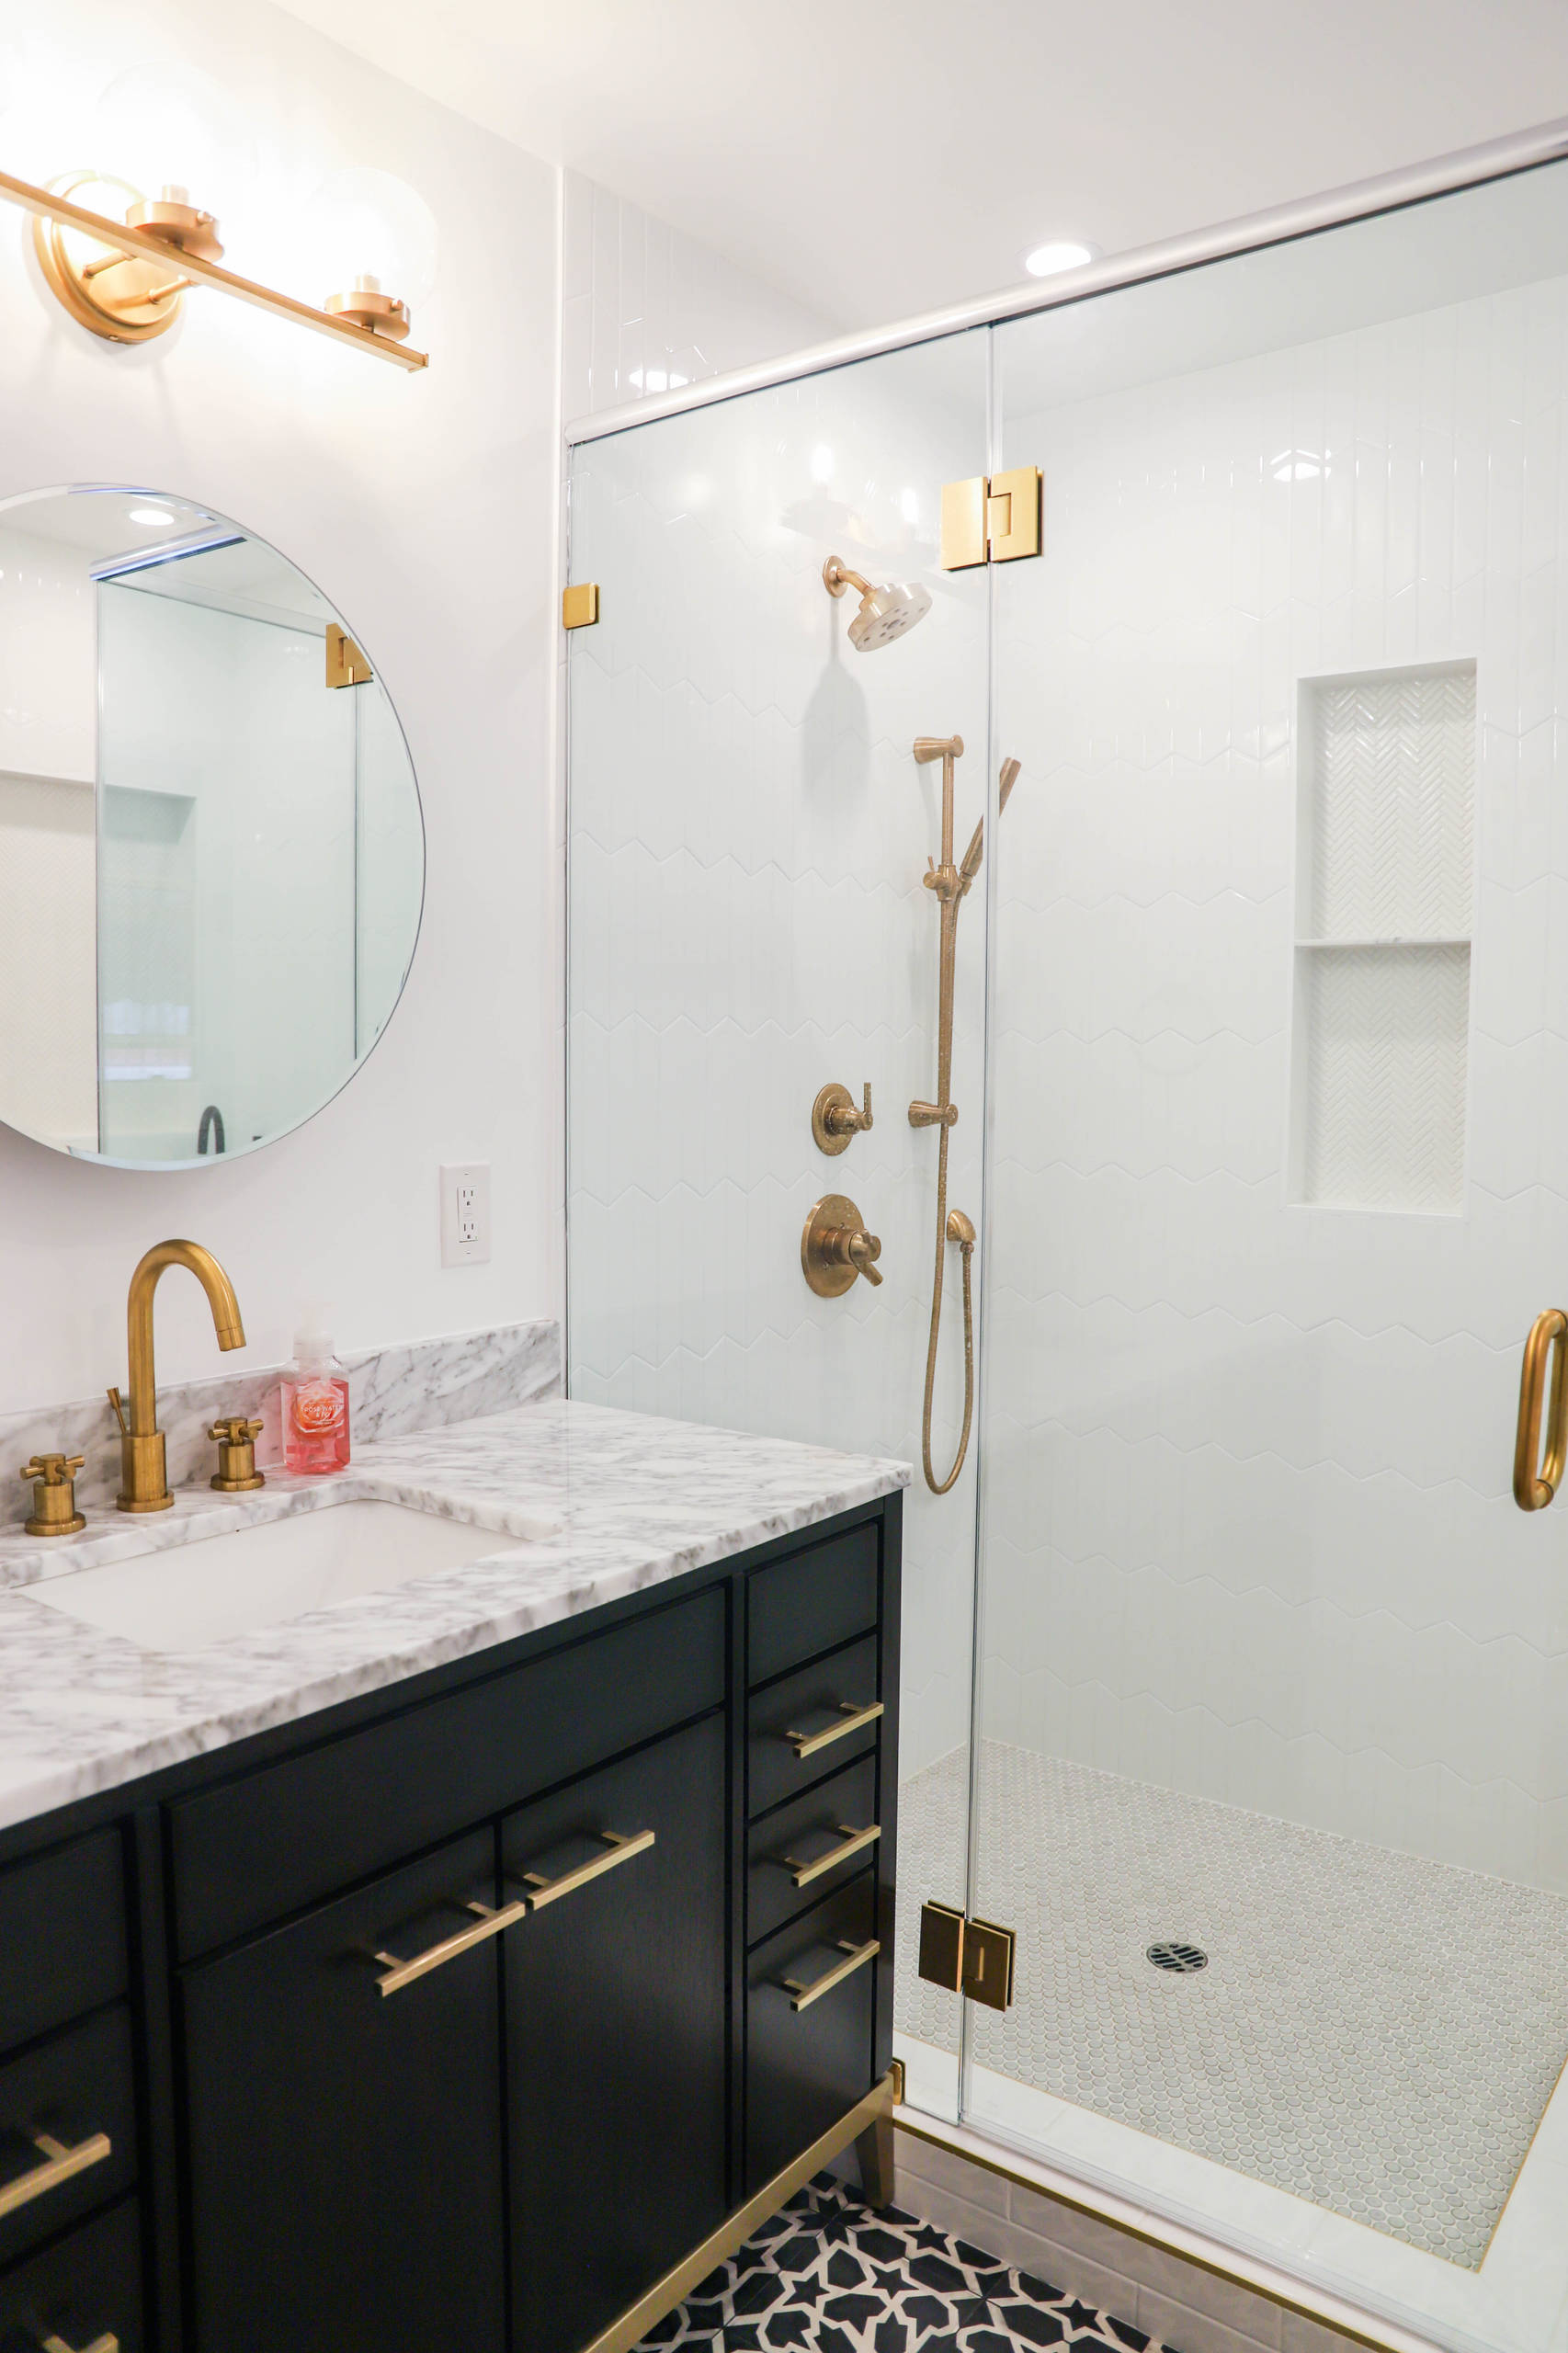 Shower Enclosure, Vanity, Tiled Shower & Floor